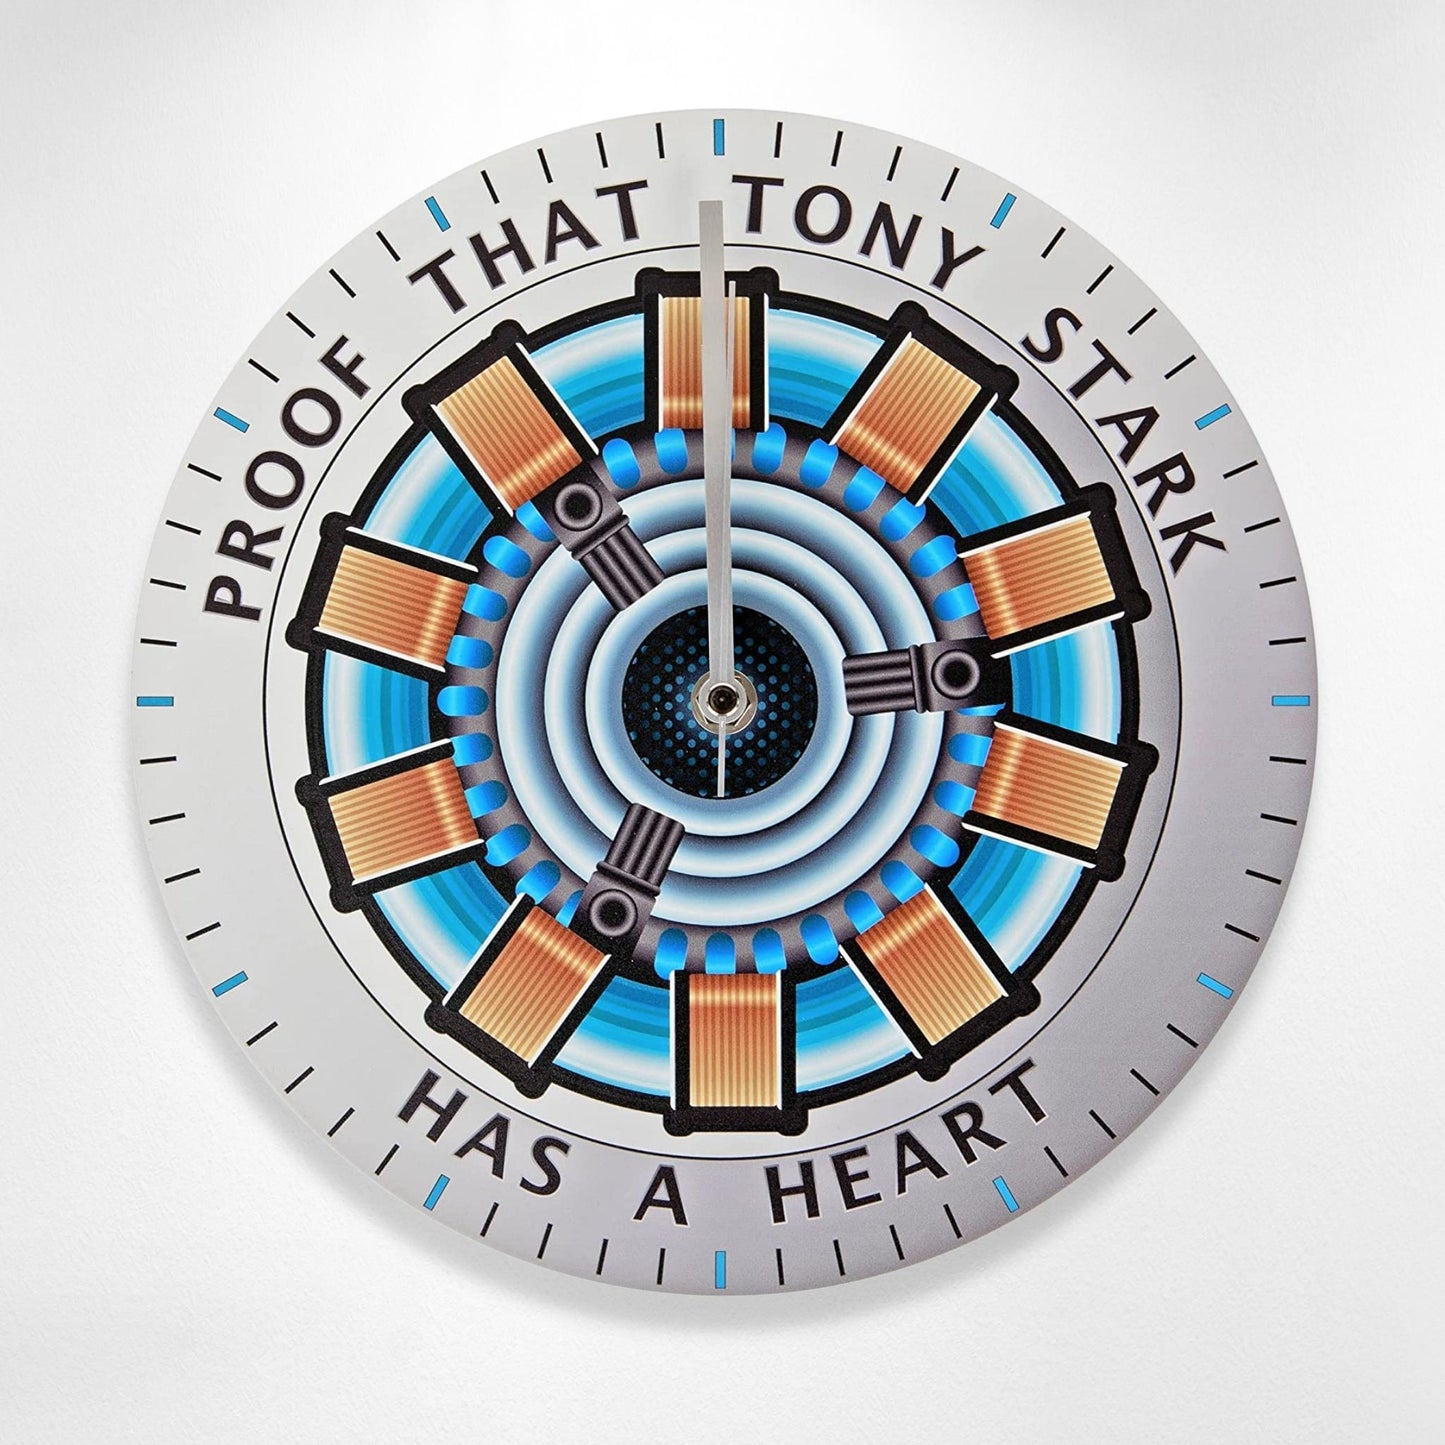 Arc Reactor "Proof that Tony Stark Has a Heart" (Marvel Avengers) 10" Wood Wall Clock